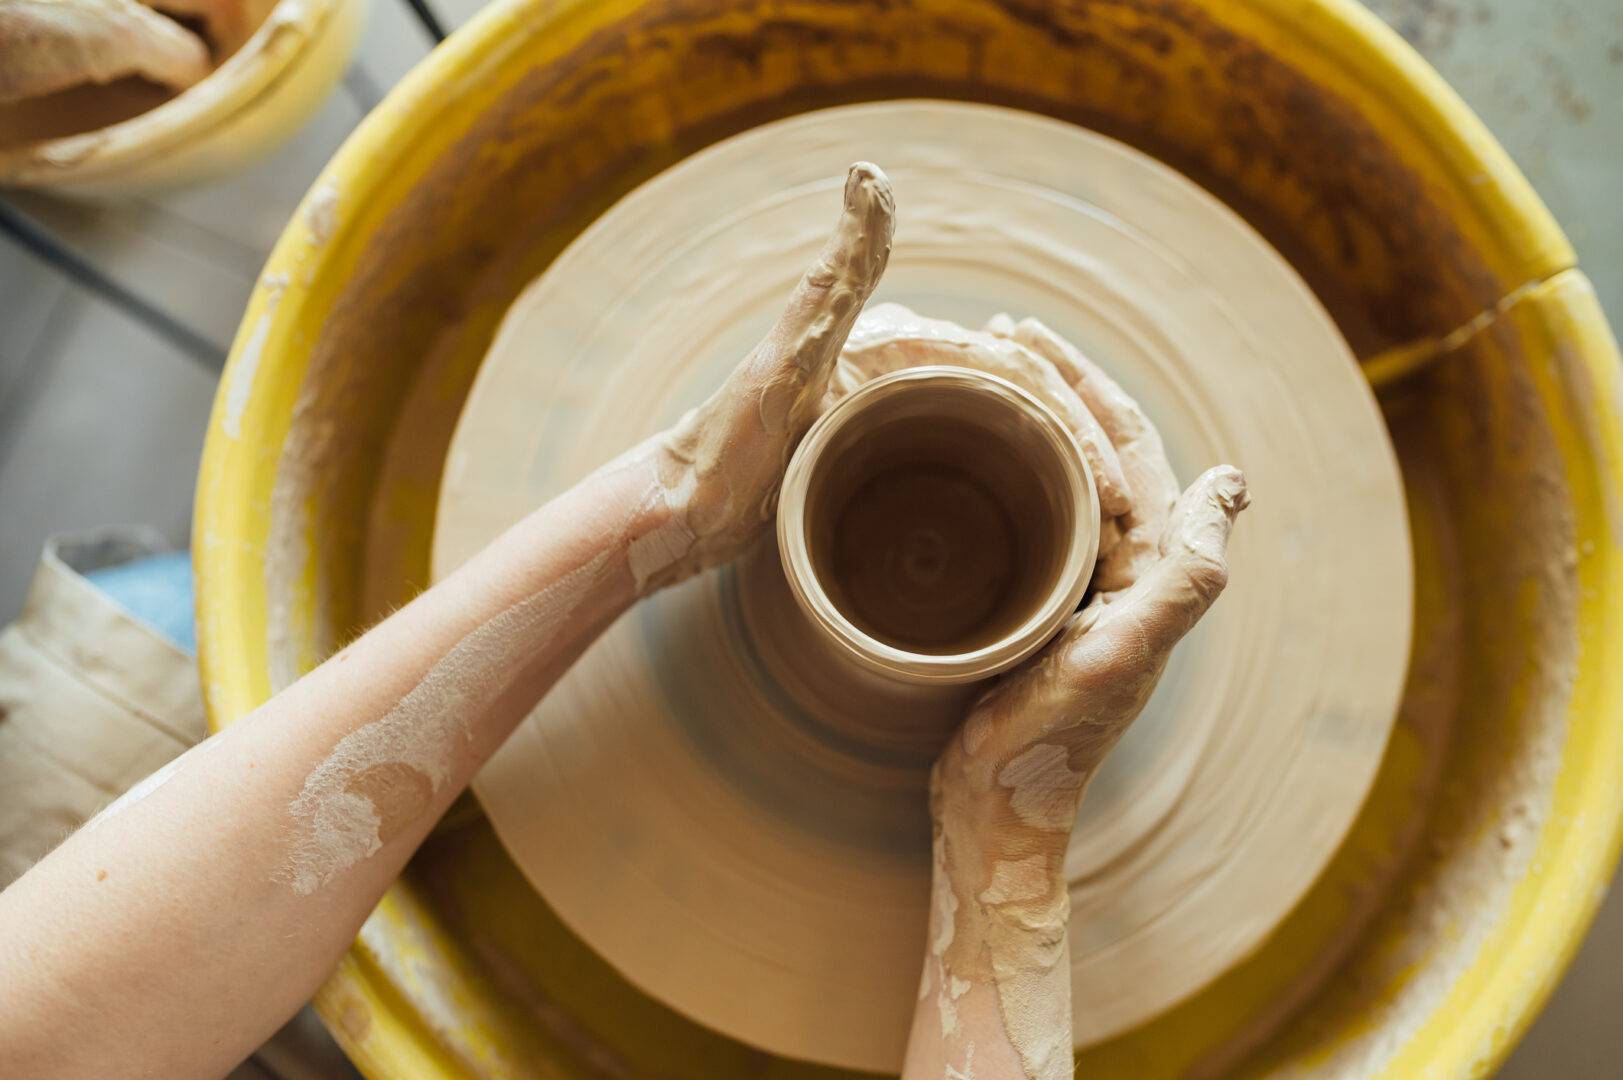 hands of a potter.  Potter making ceramic pot on the potter's wheel.